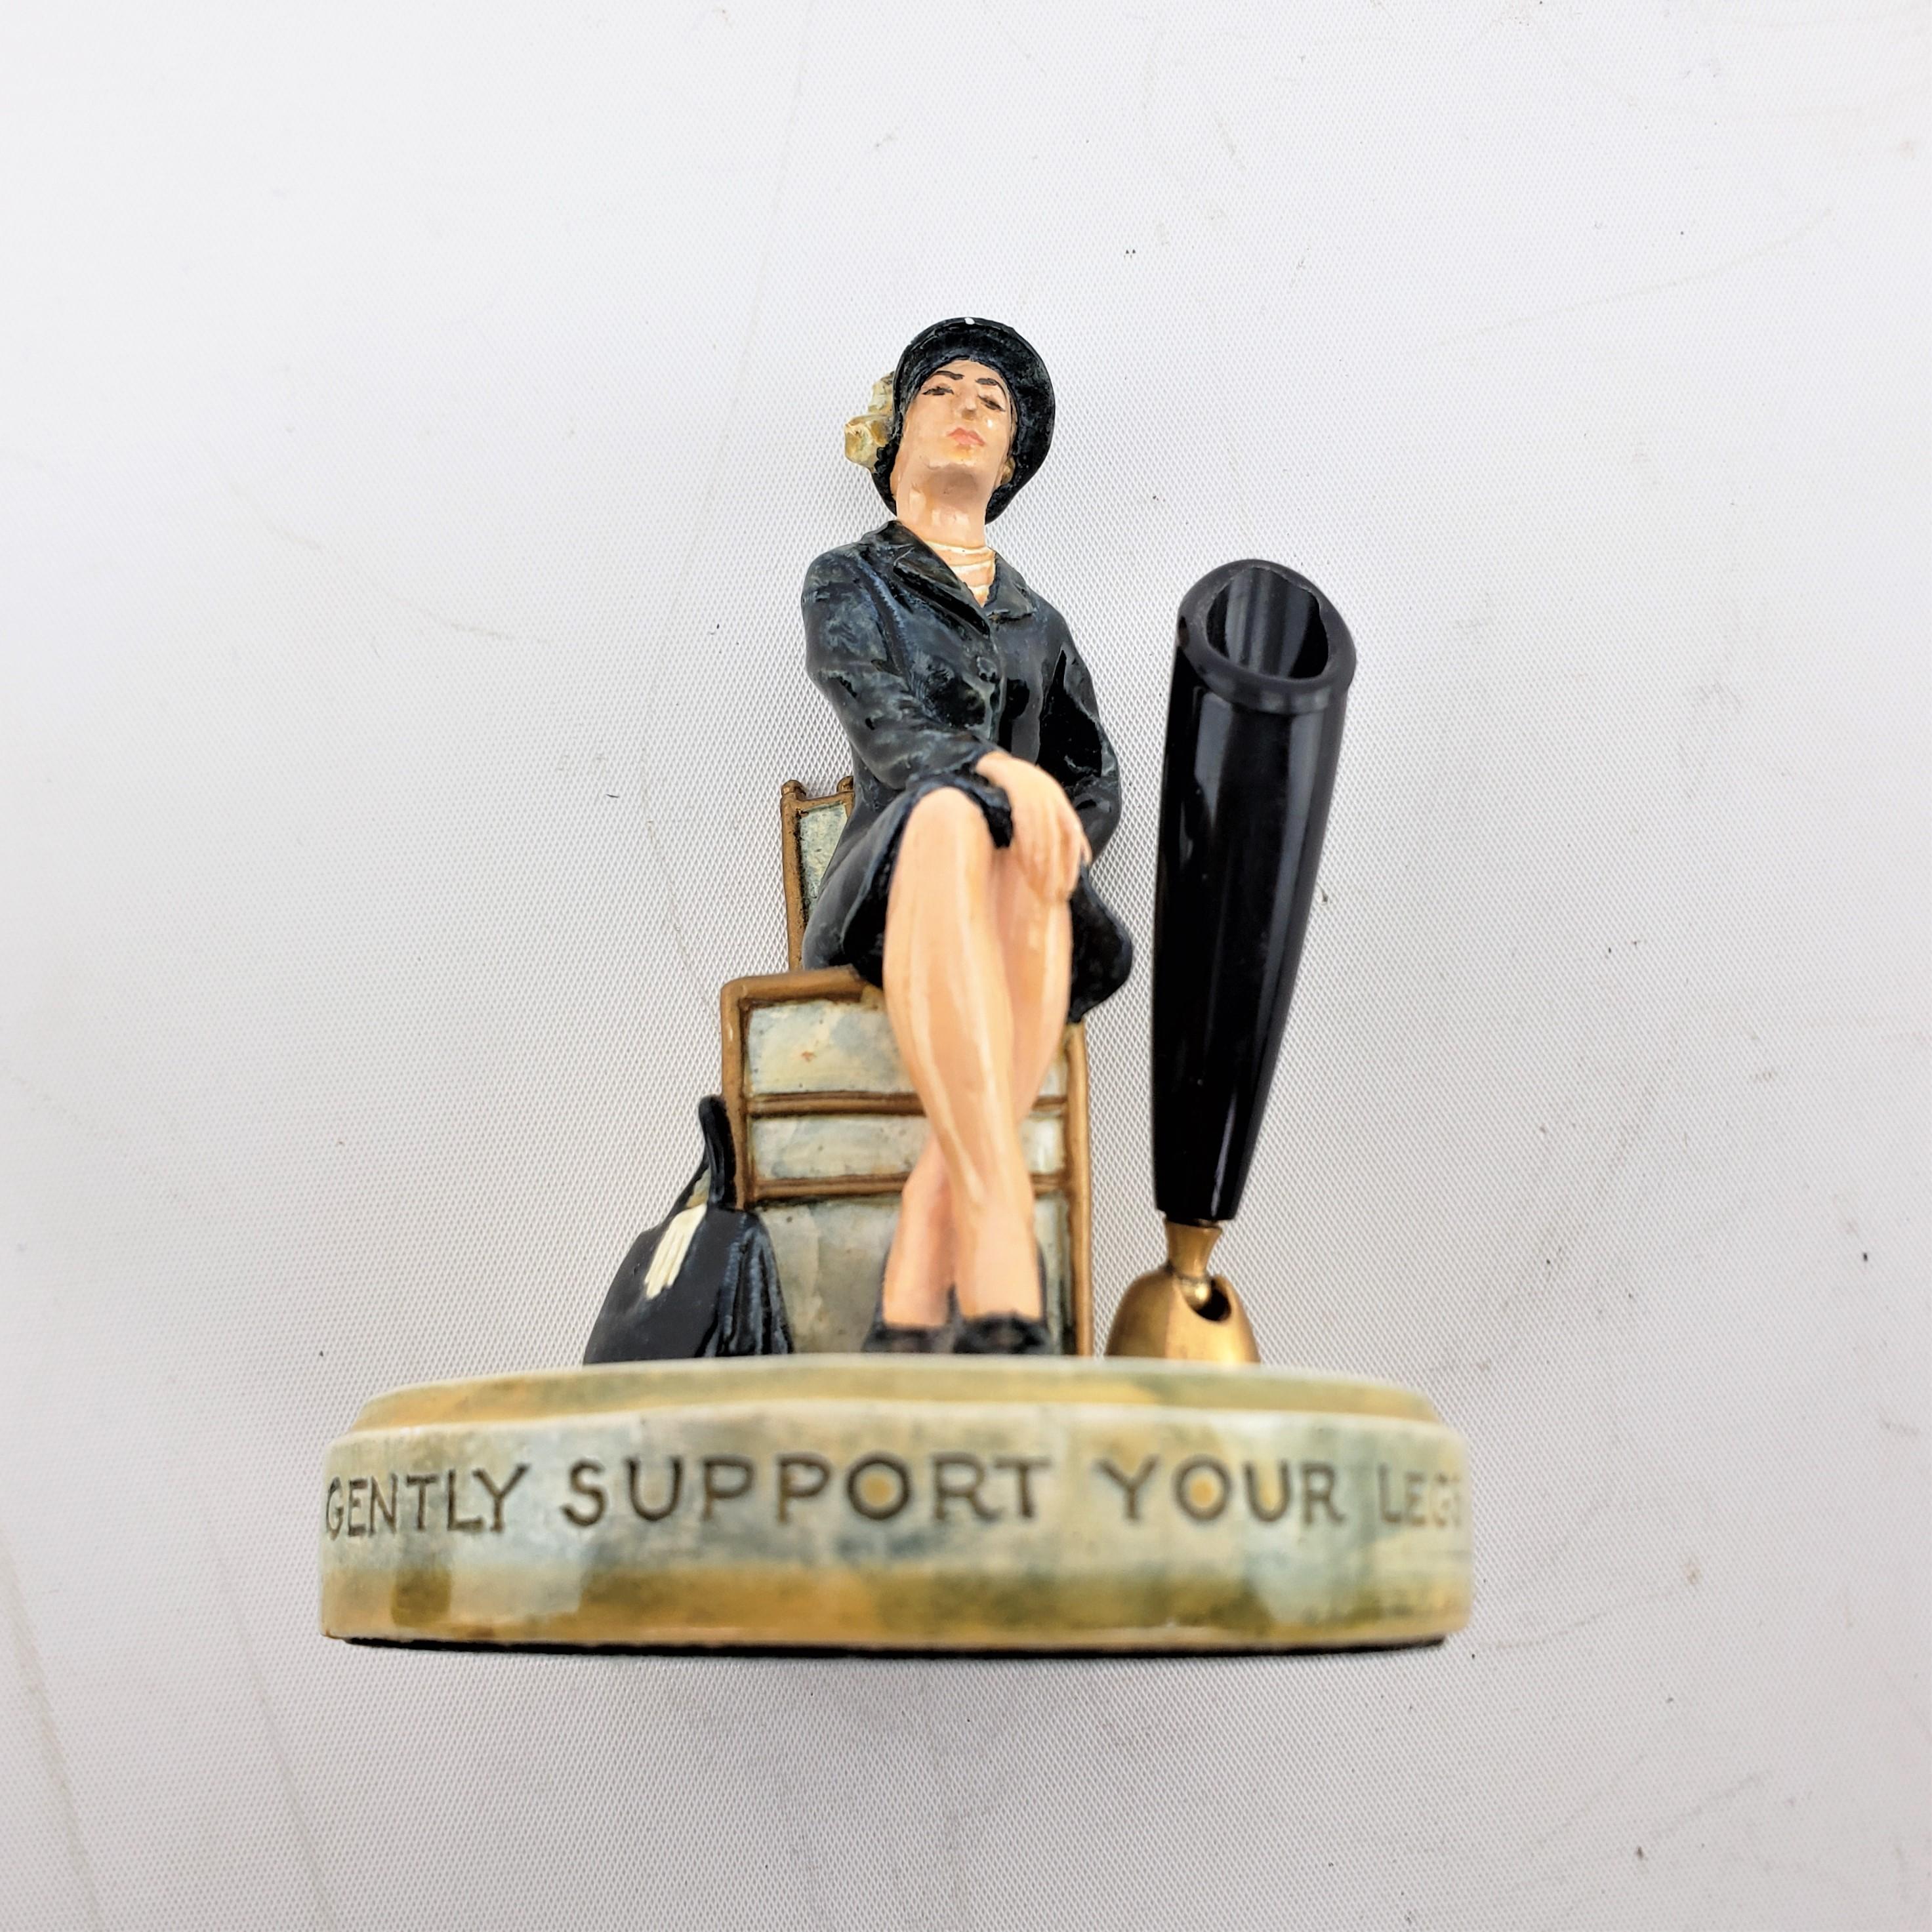 P.W. Baston Supp-Hose Woman's Stockings Advertising Pen Holder Desk Set In Good Condition For Sale In Hamilton, Ontario